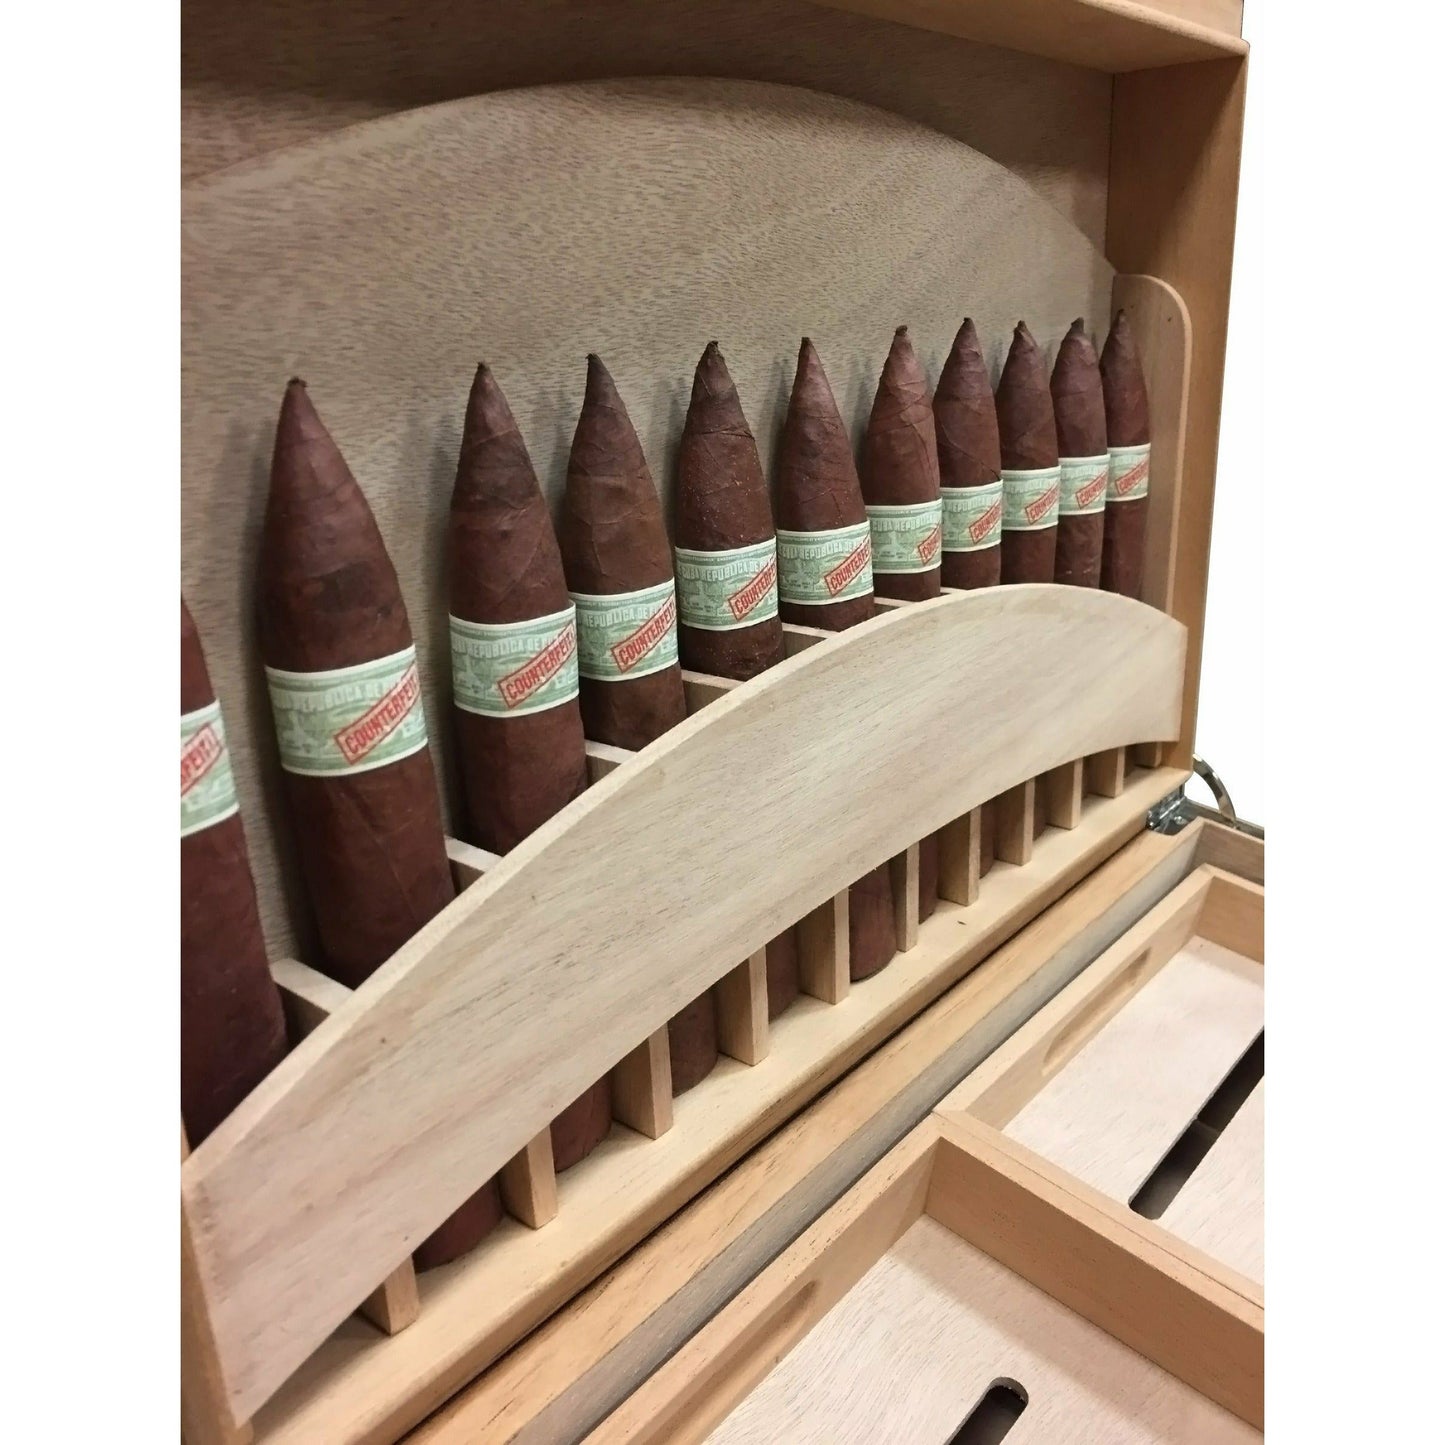 Rockefeller 130 Ct. Ebony Wood Humidor w/ 9-Cigar Lid Display Feature-Humidors-Wine Whiskey and Smoke